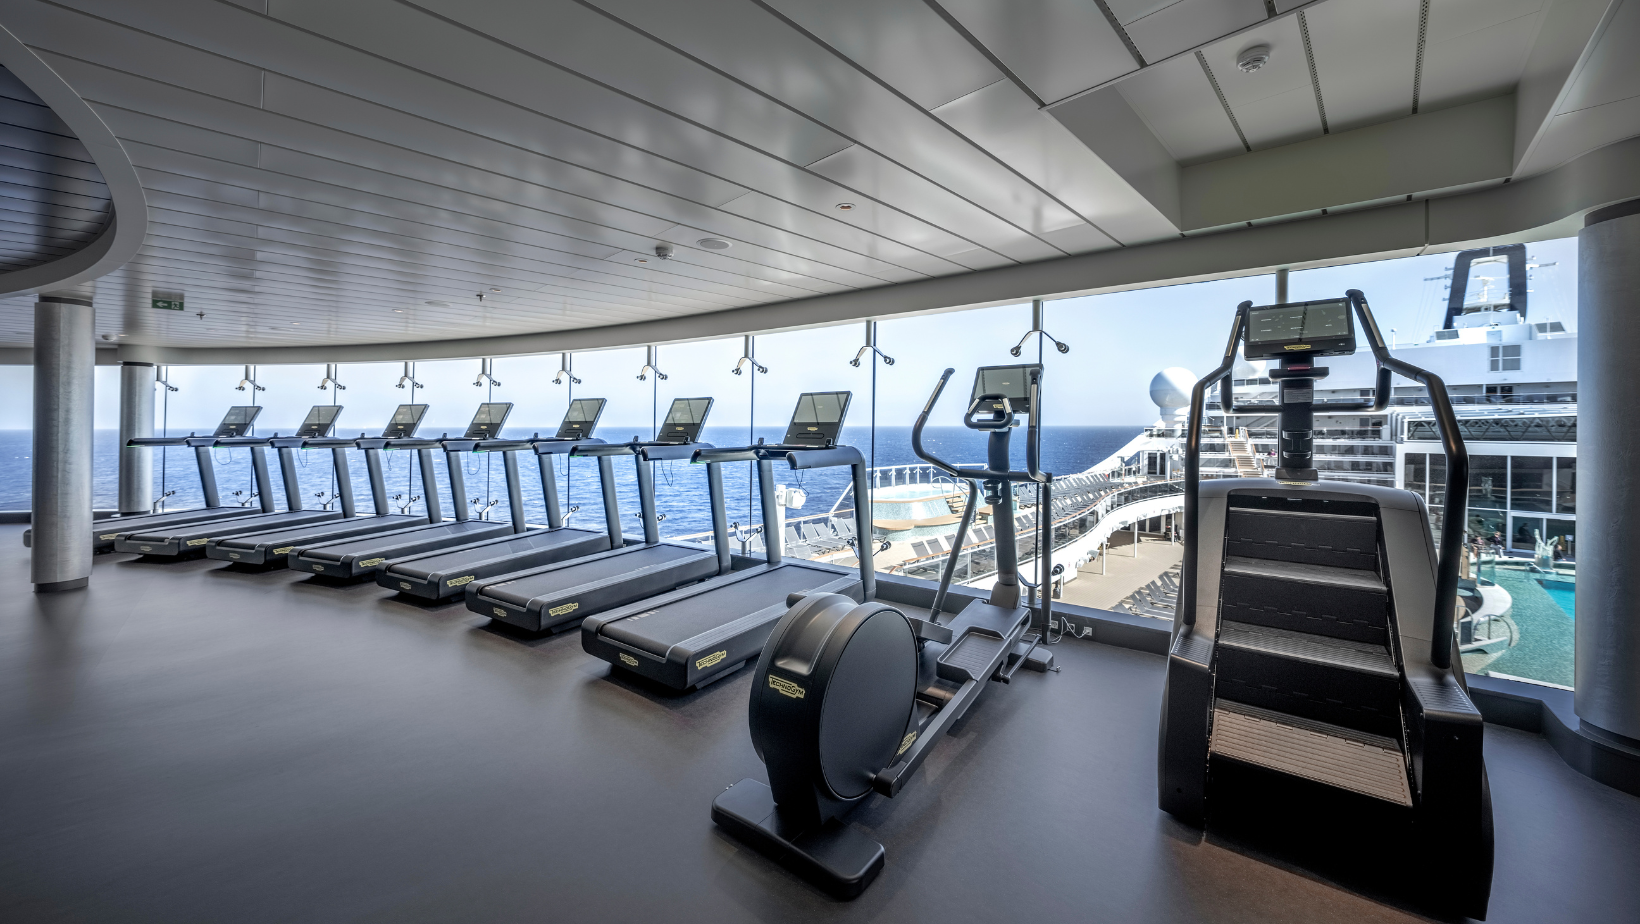 Fitnesscenter på krydstogtskib